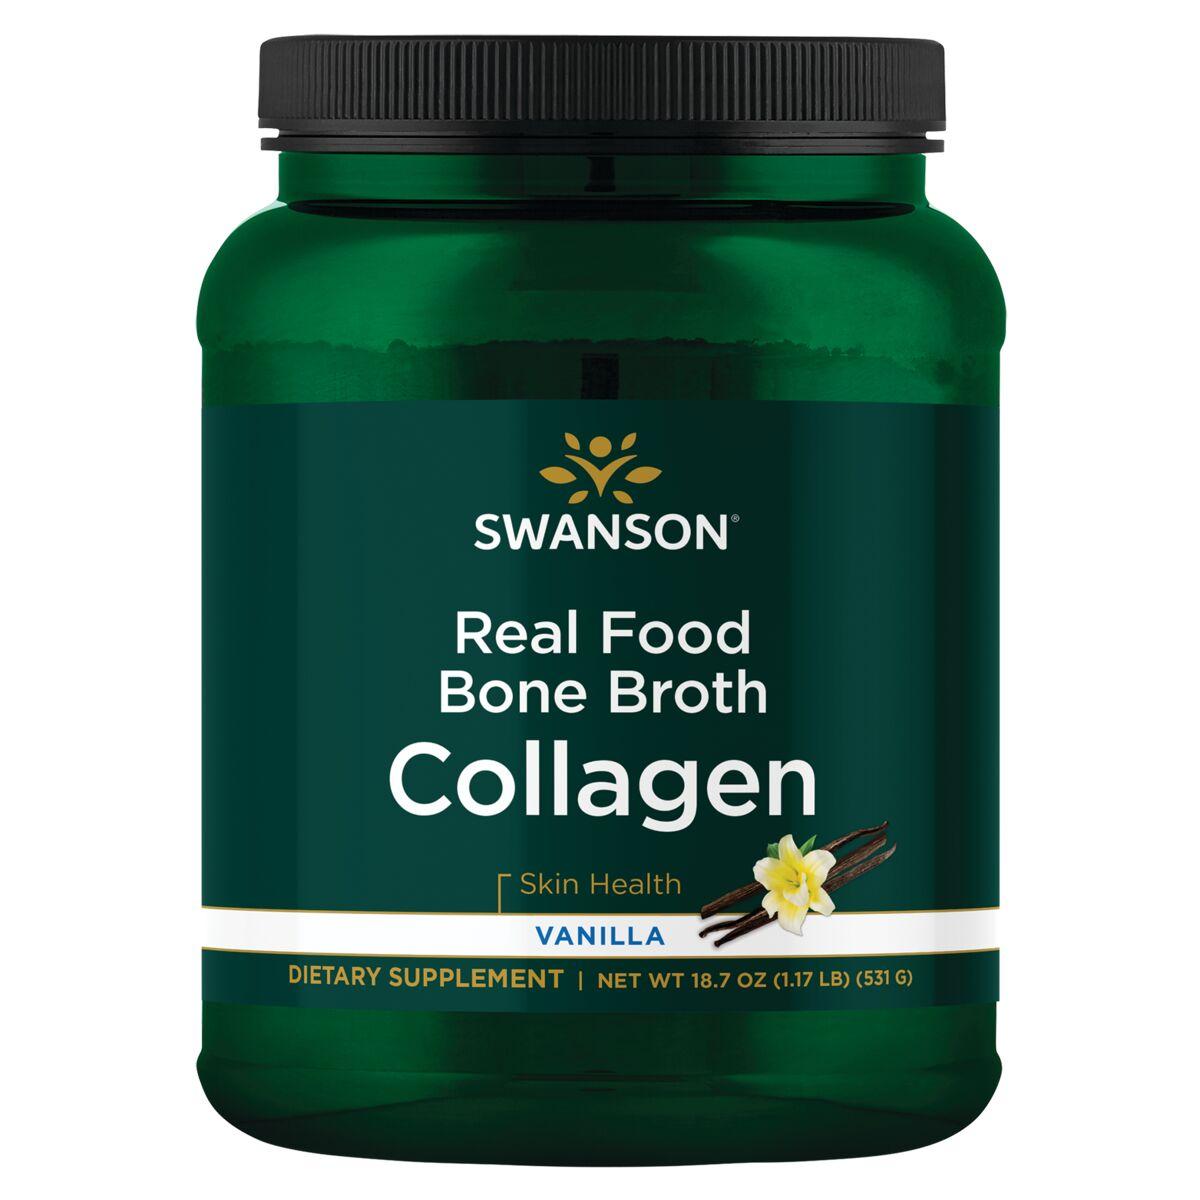 Swanson Ultra Real Food Bone Broth Collagen - Vanilla Supplement Vitamin | 18.7 oz Powder